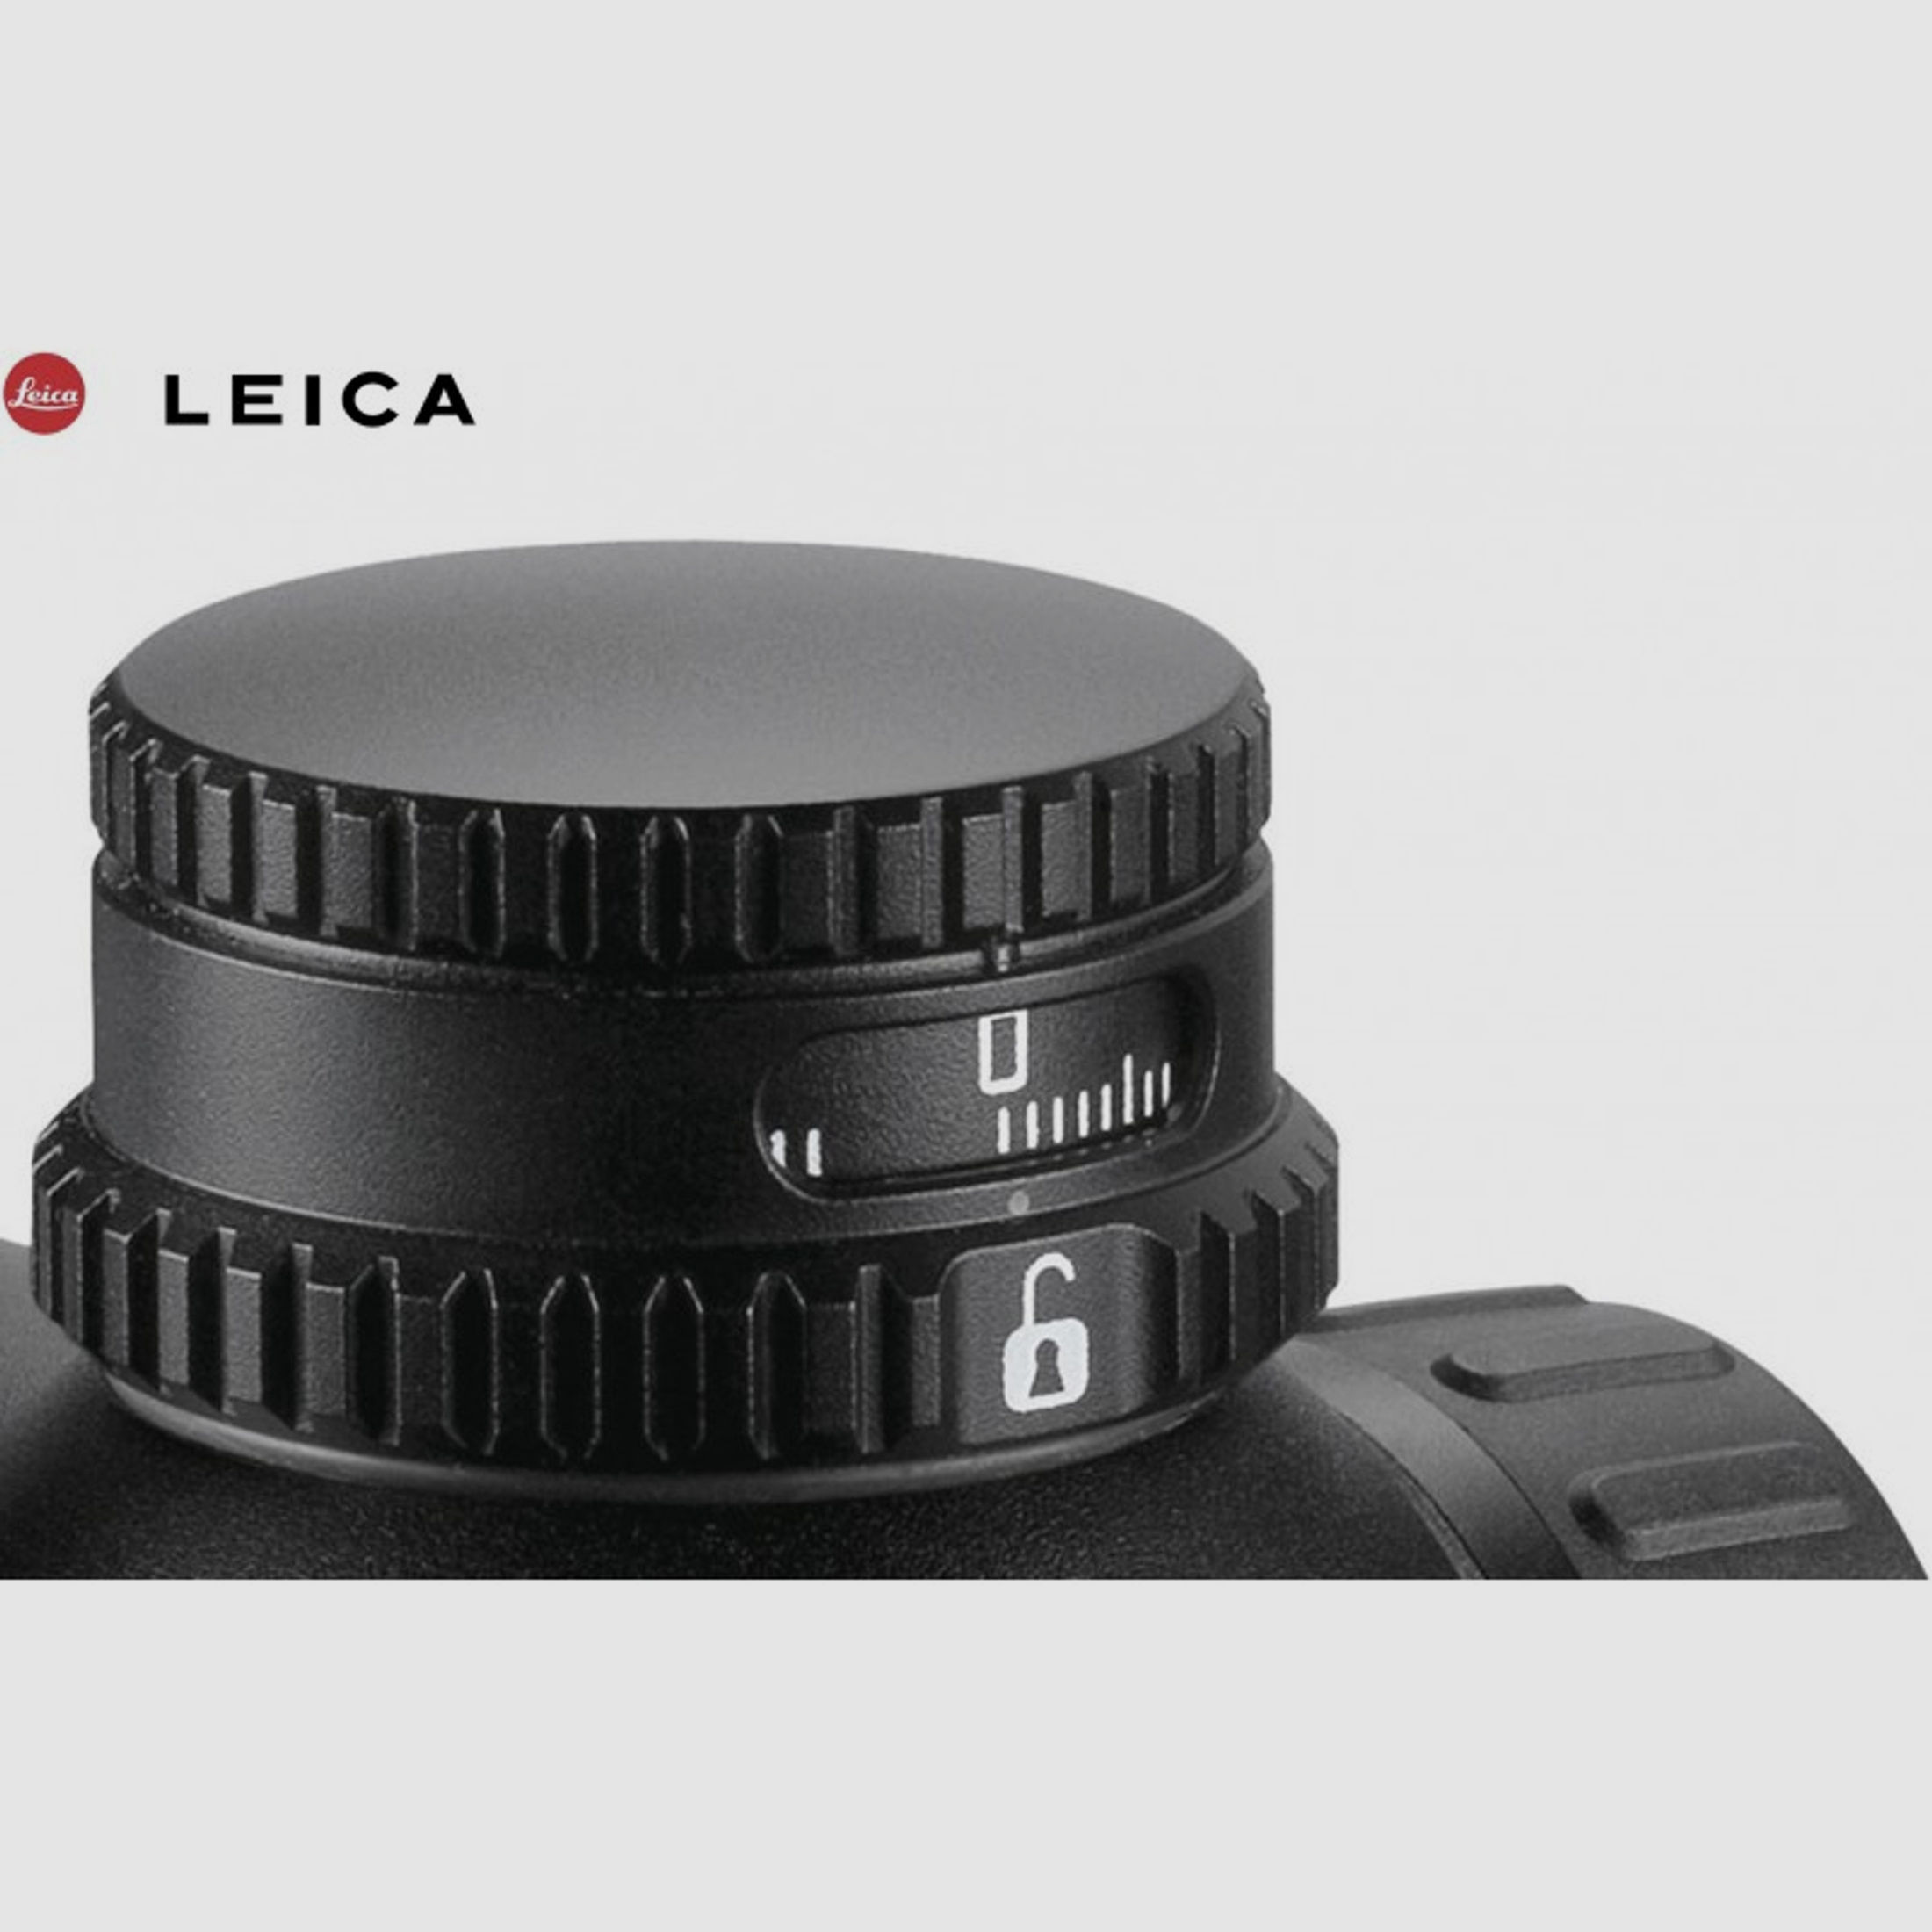 Leica Magnus 1,8-12x50 i, L-4a BDC mit Schiene